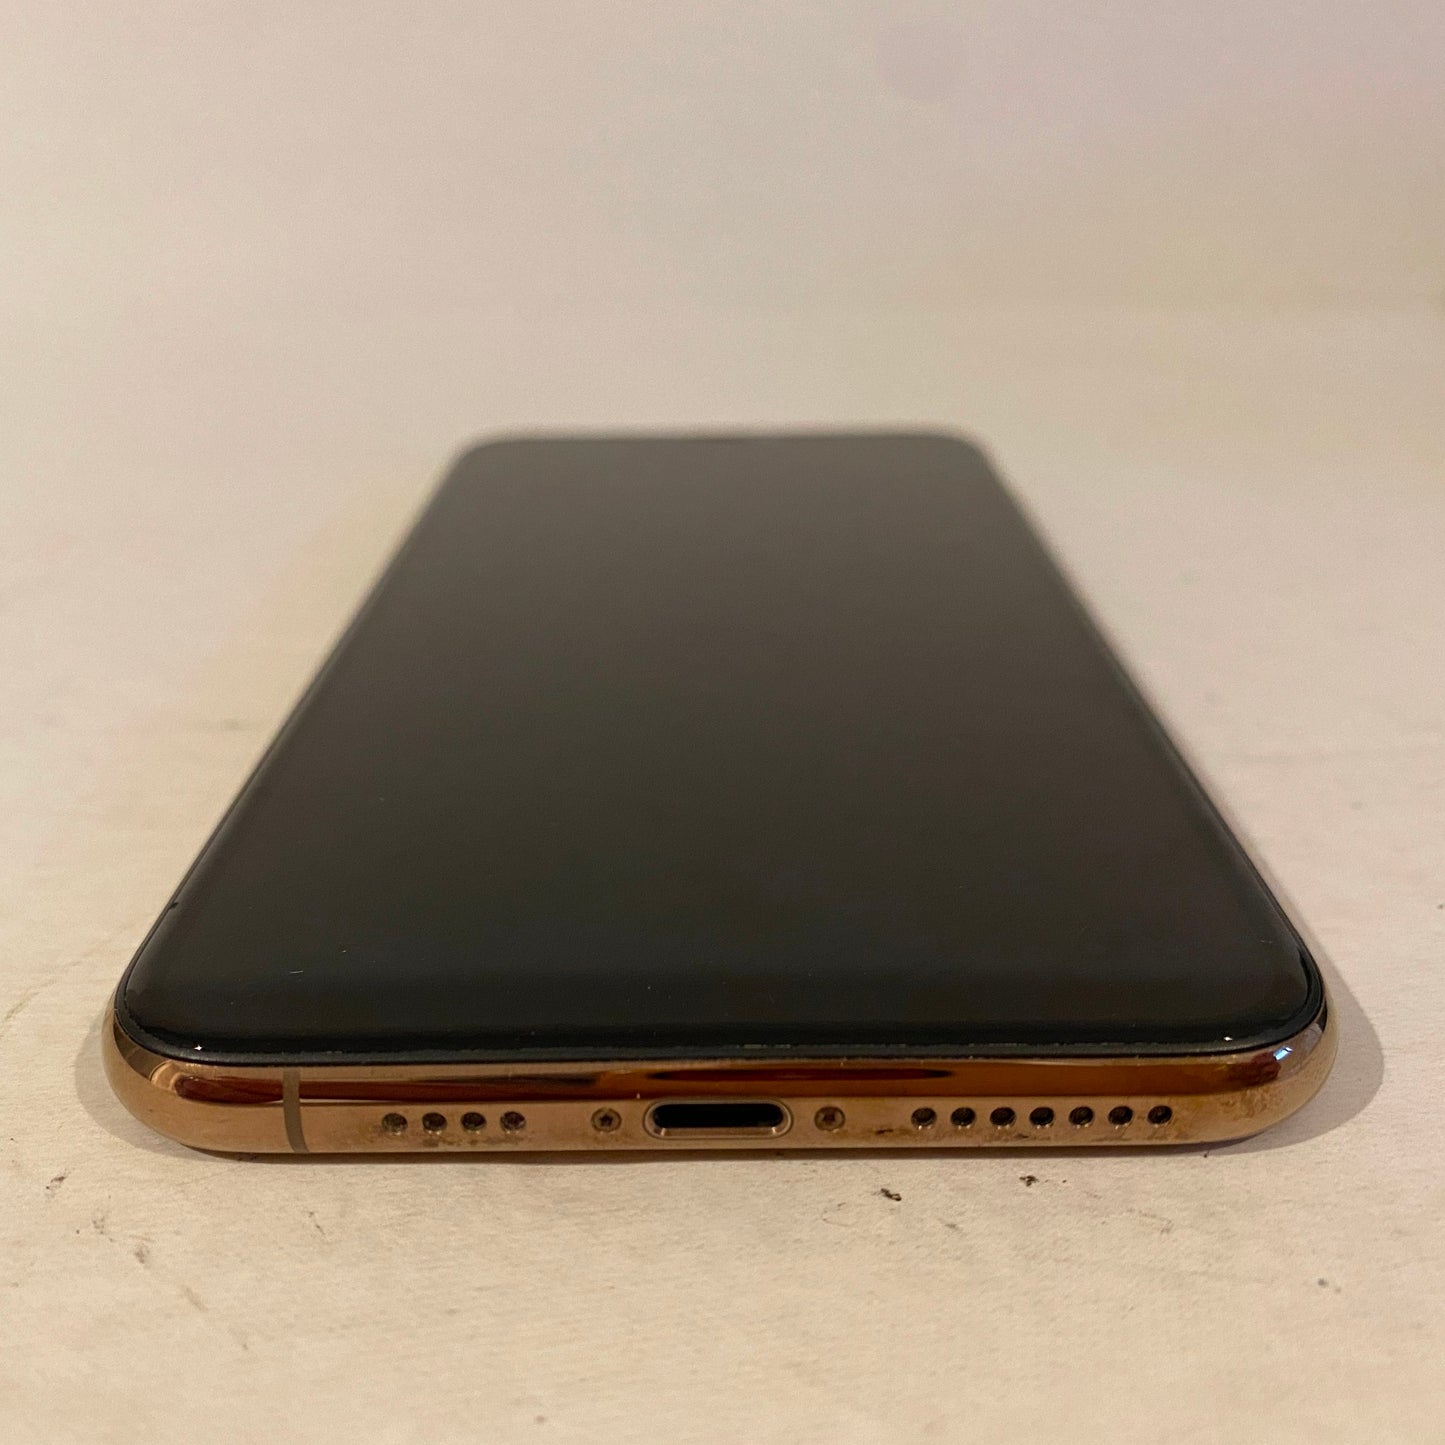 Apple iPhone 11 Pro Max - 64GB Gold Unlocked - A2161